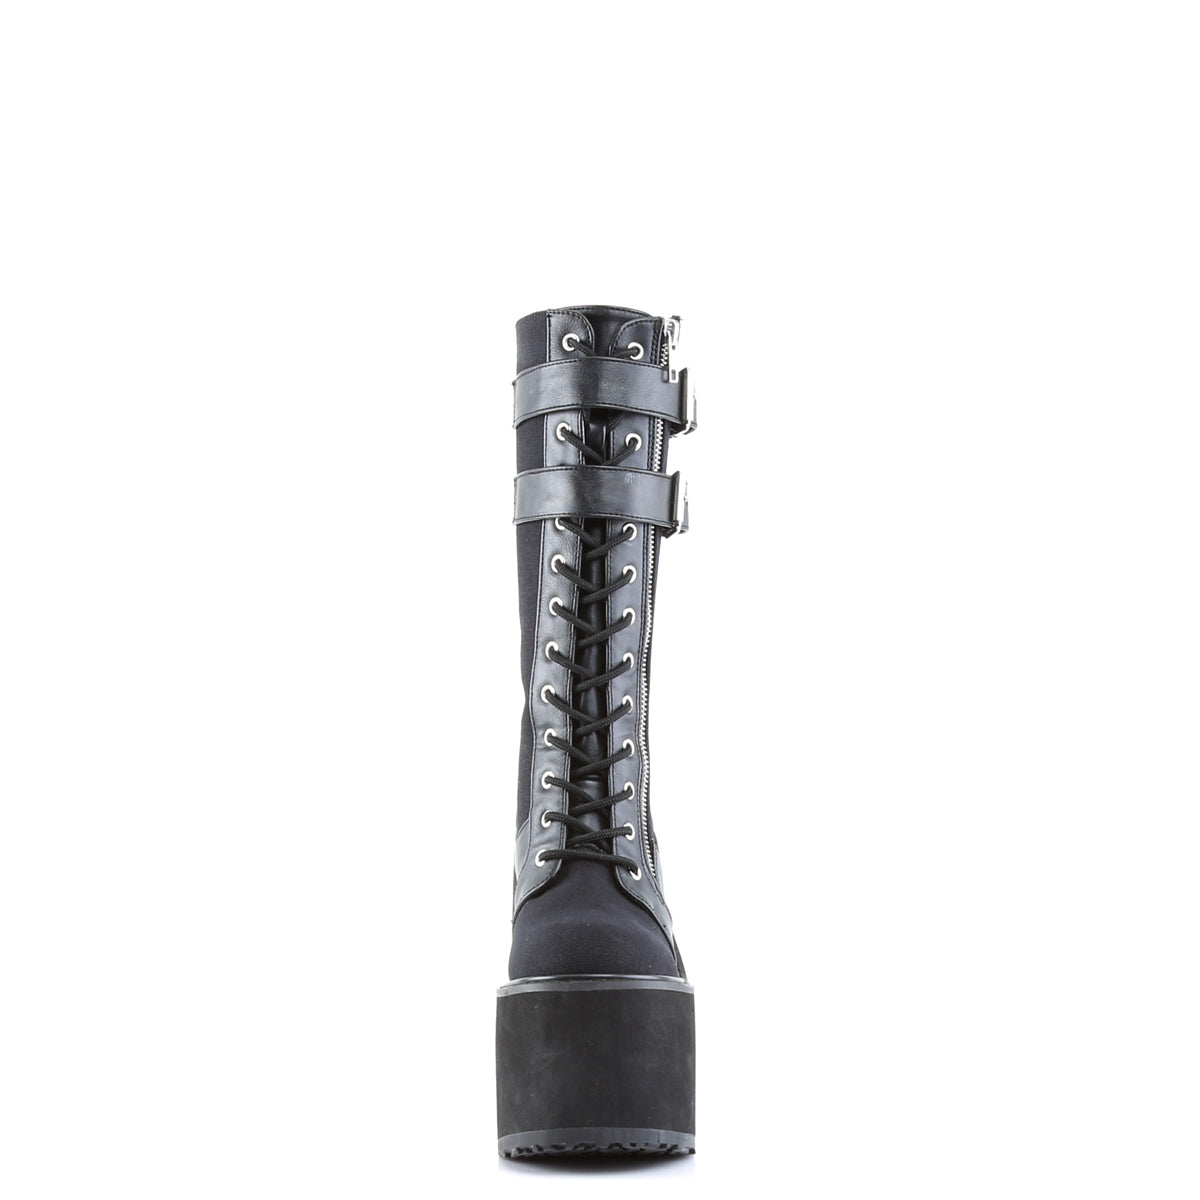 SWING-221 Demonia Black Canvas-Vegan Leather Women's Mid-Calf & Knee High Boots [Alternative Footwear]